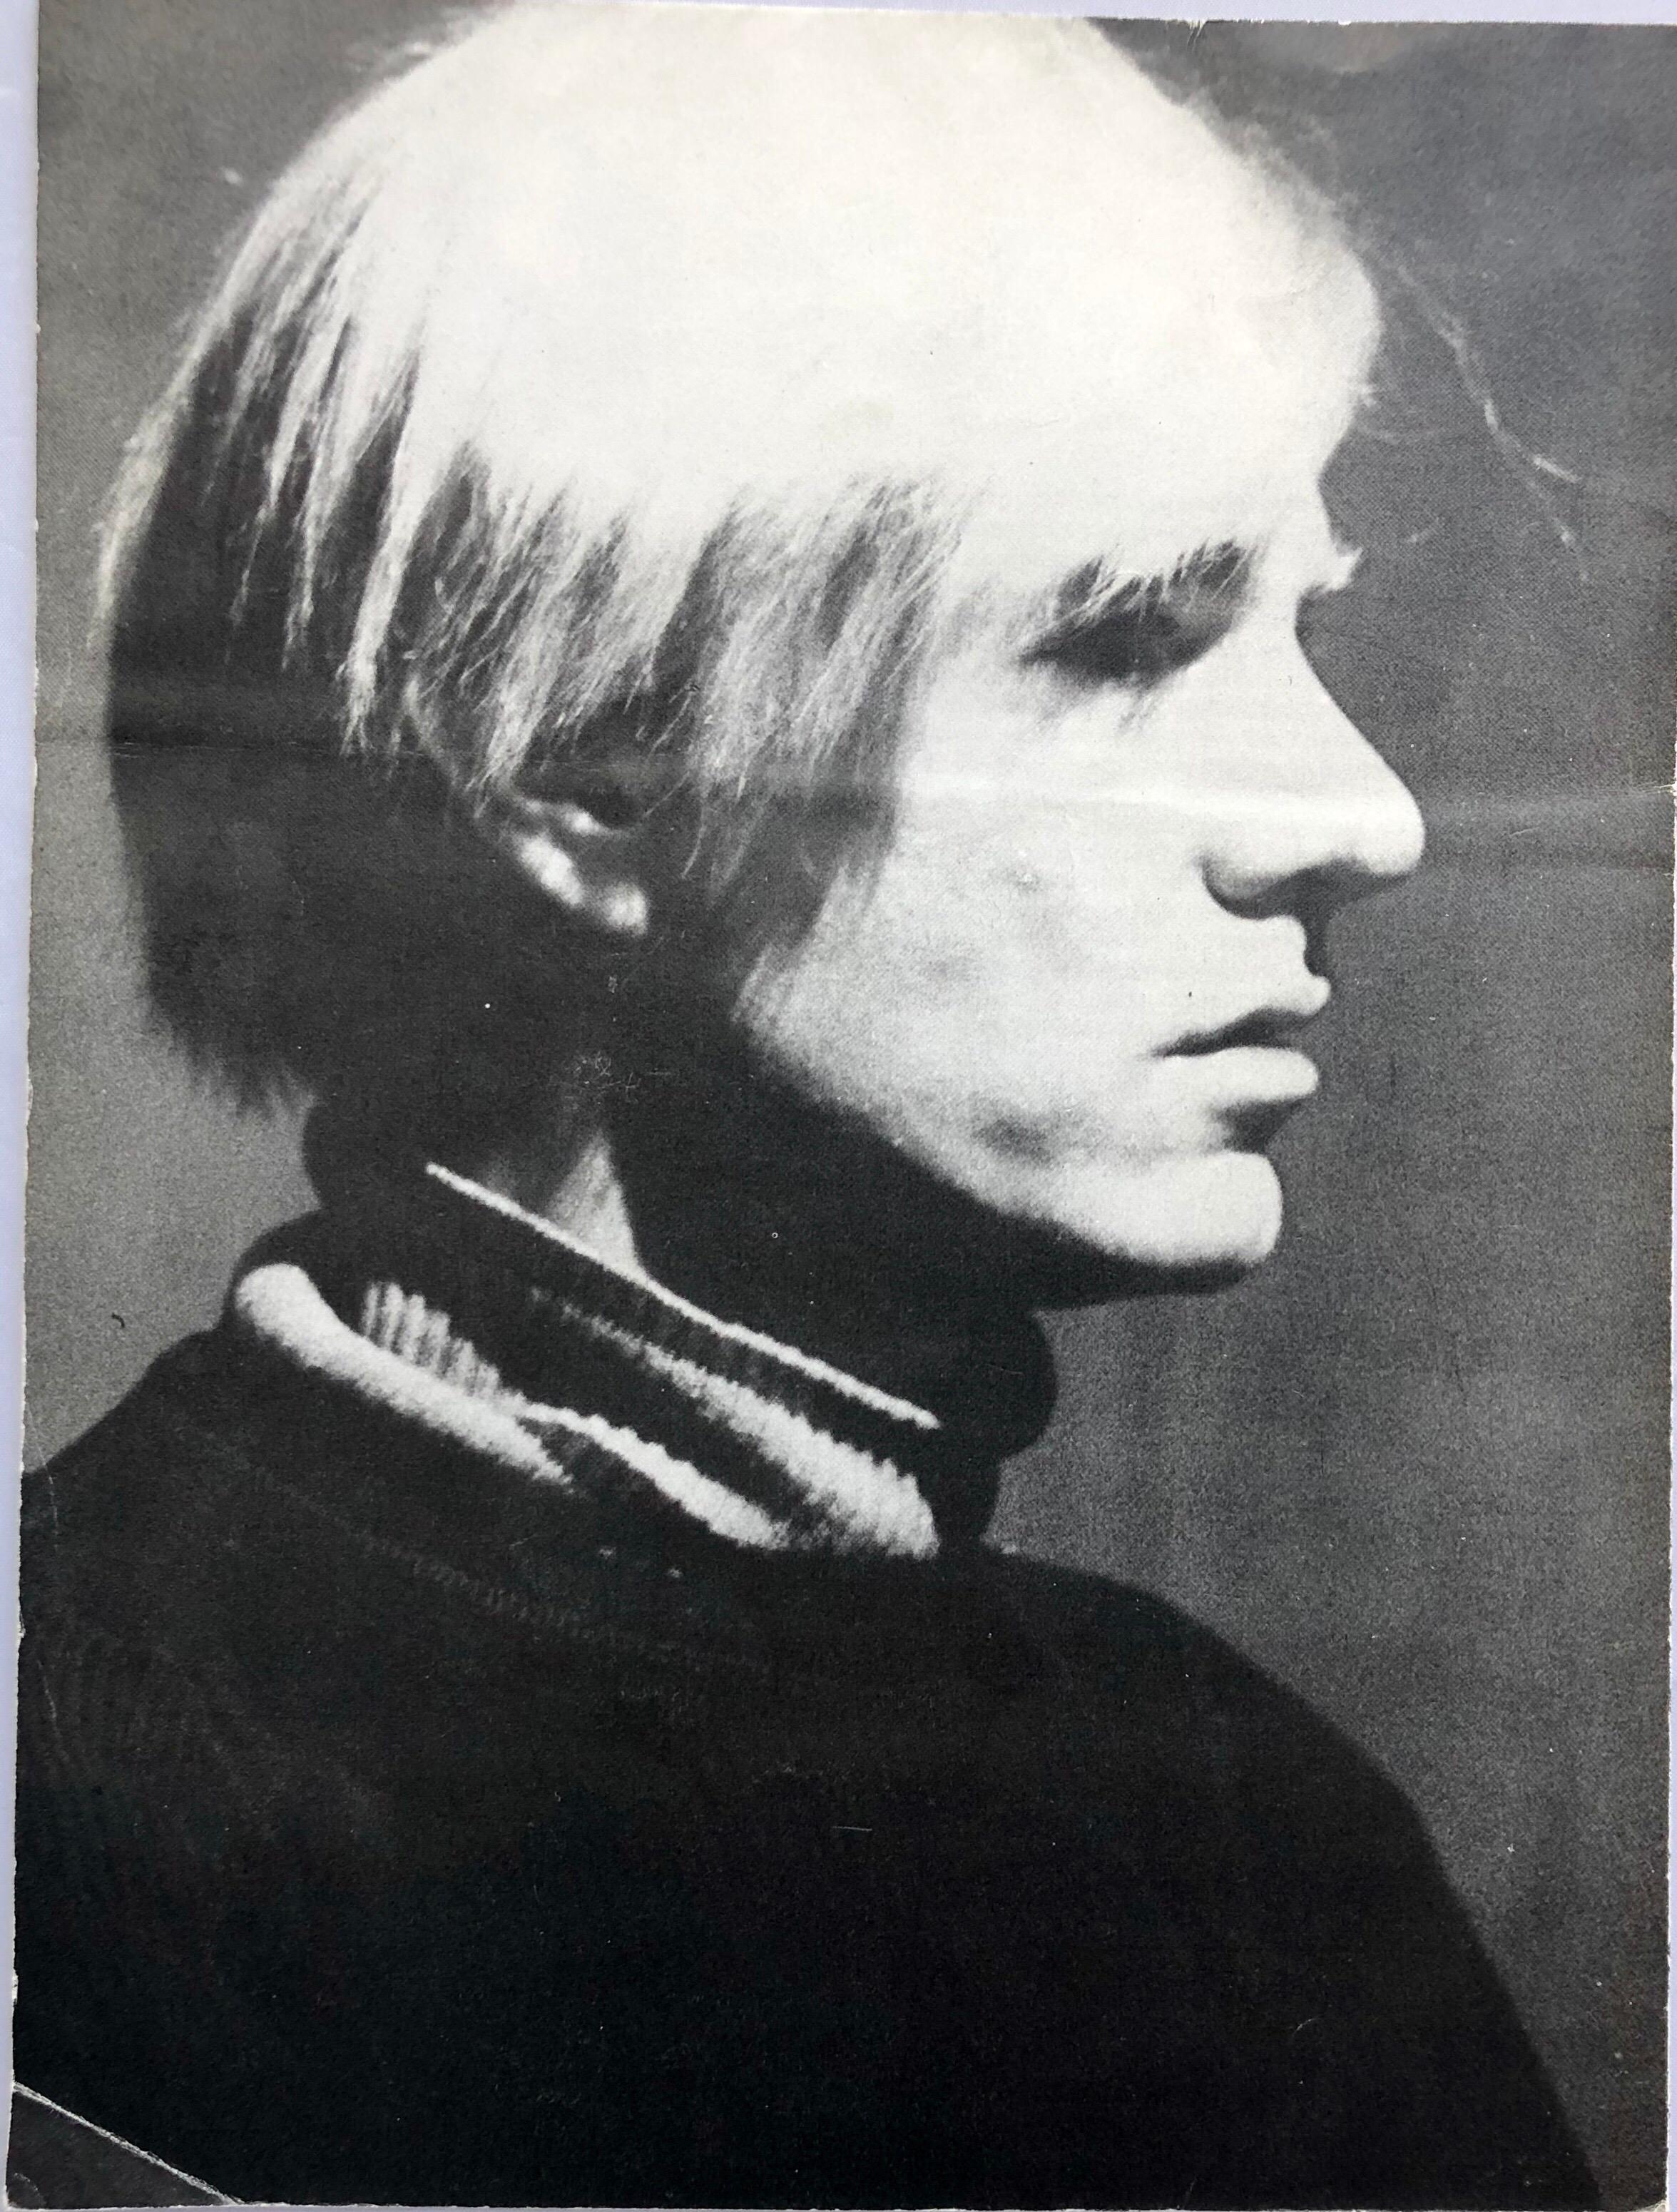 Catalogue du Musée d'Art Moderne Andy Warhol (Warhol Cow)  - Print de (after) Andy Warhol